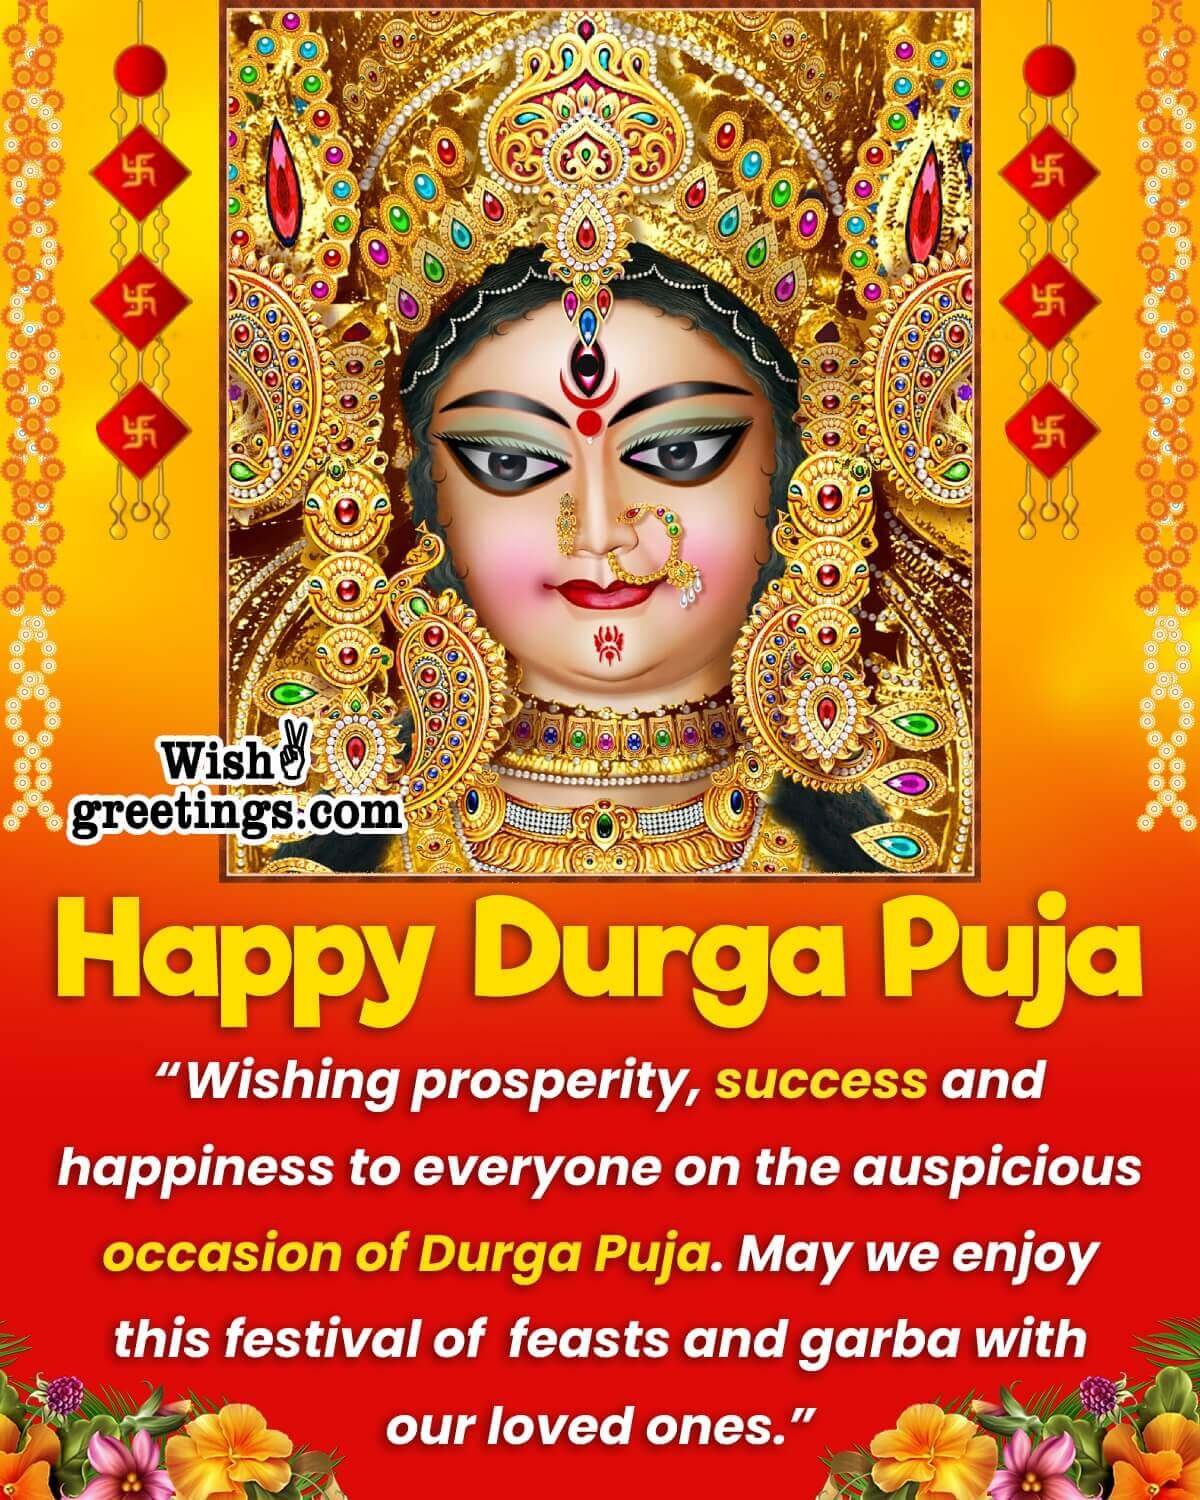 Durga Puja Message Pic